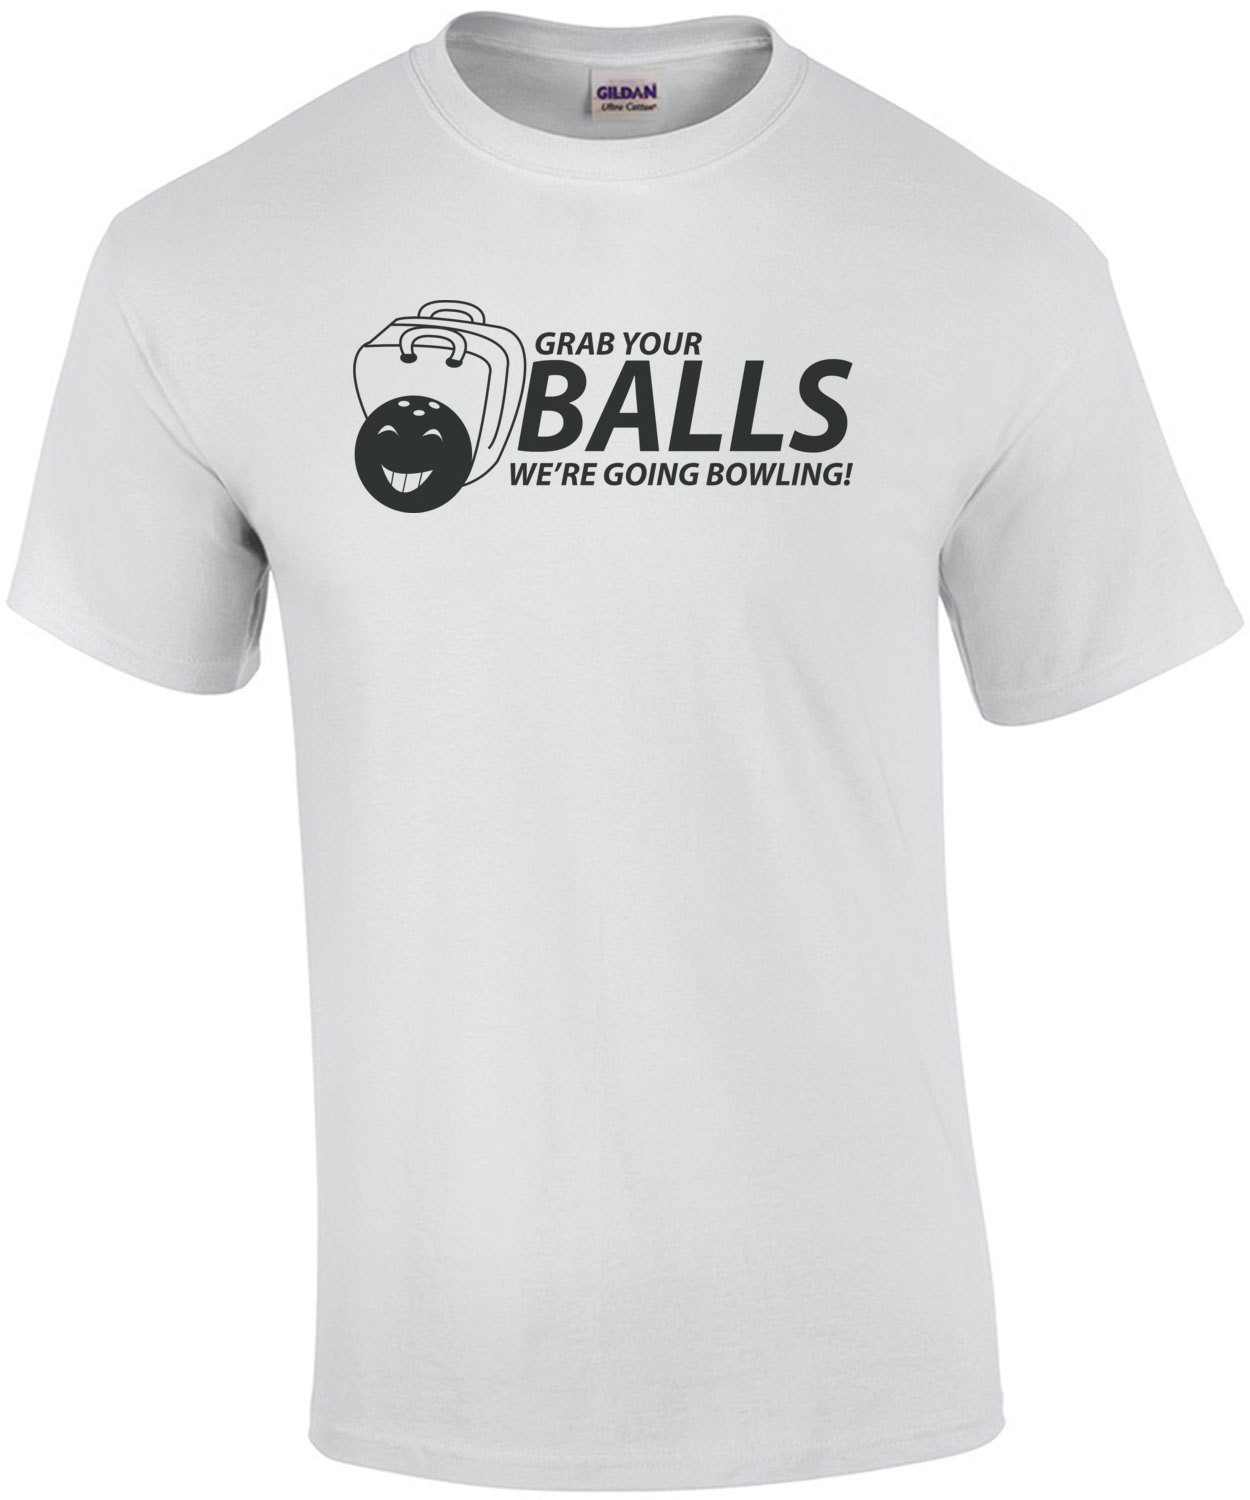 Grab Your Balls We're Going Bowling! Kids Shirt